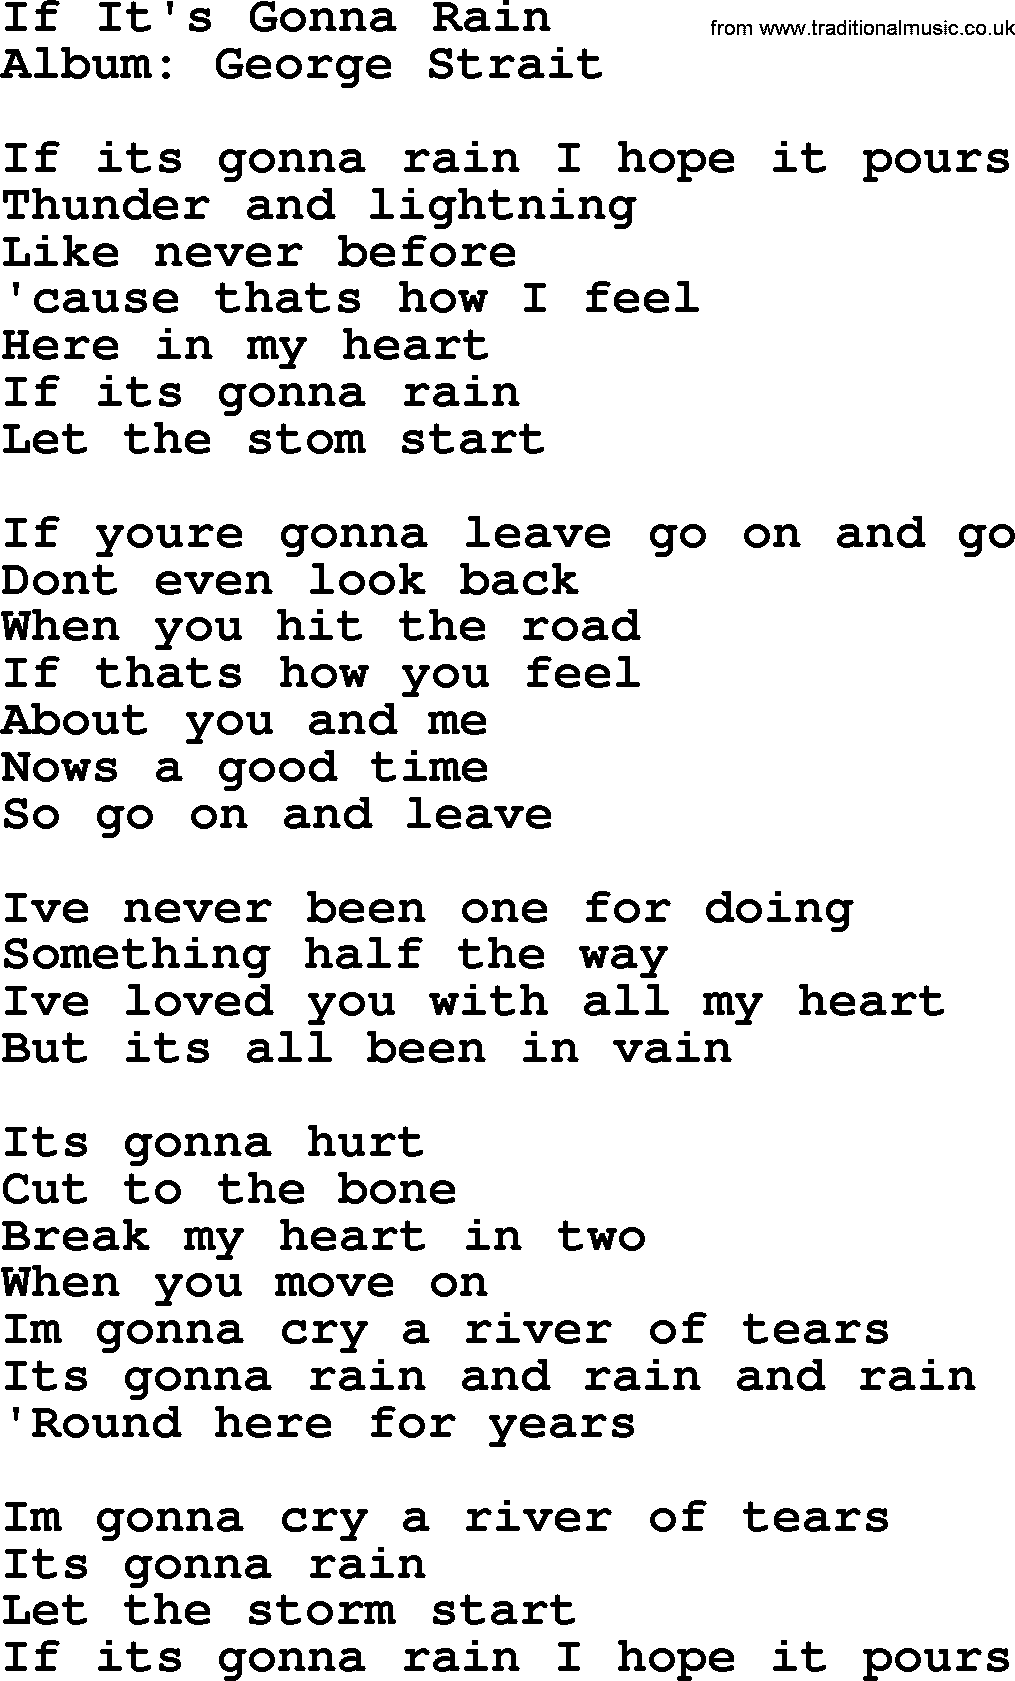 George Strait song: If It's Gonna Rain, lyrics